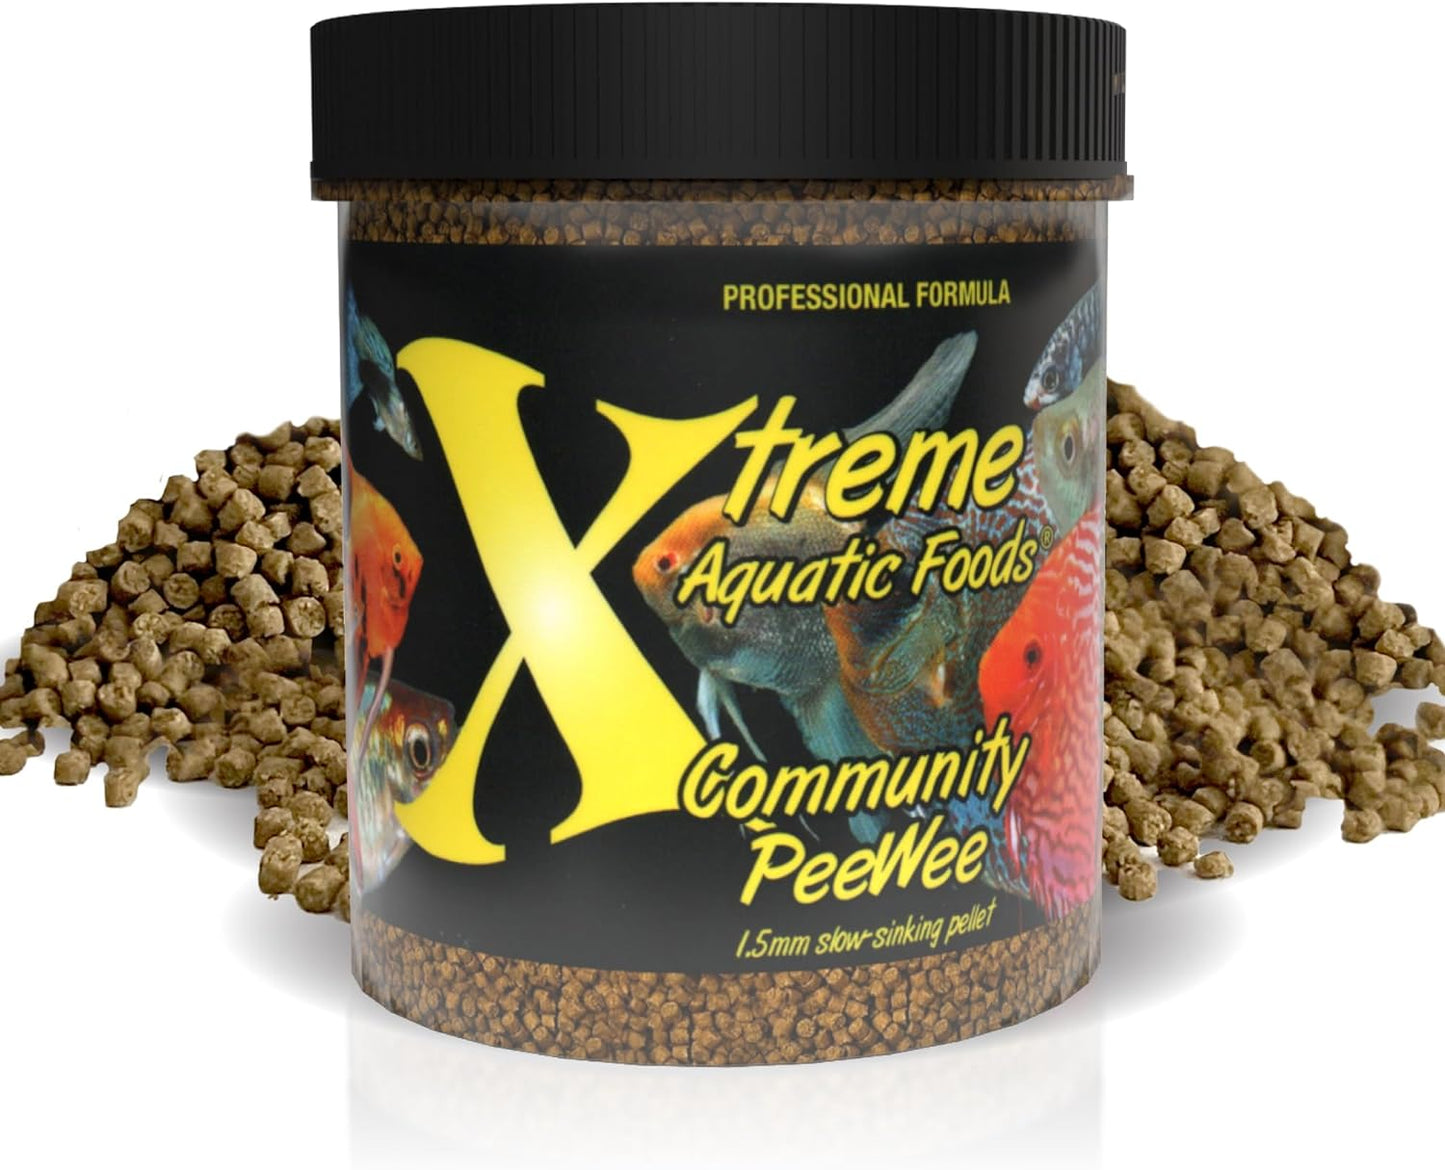 Xtreme Aquatic Foods Community PeeWee 1.5mm Slow-Sinking Pellets 5 oz (140g) 893427001275 Super Cichlids